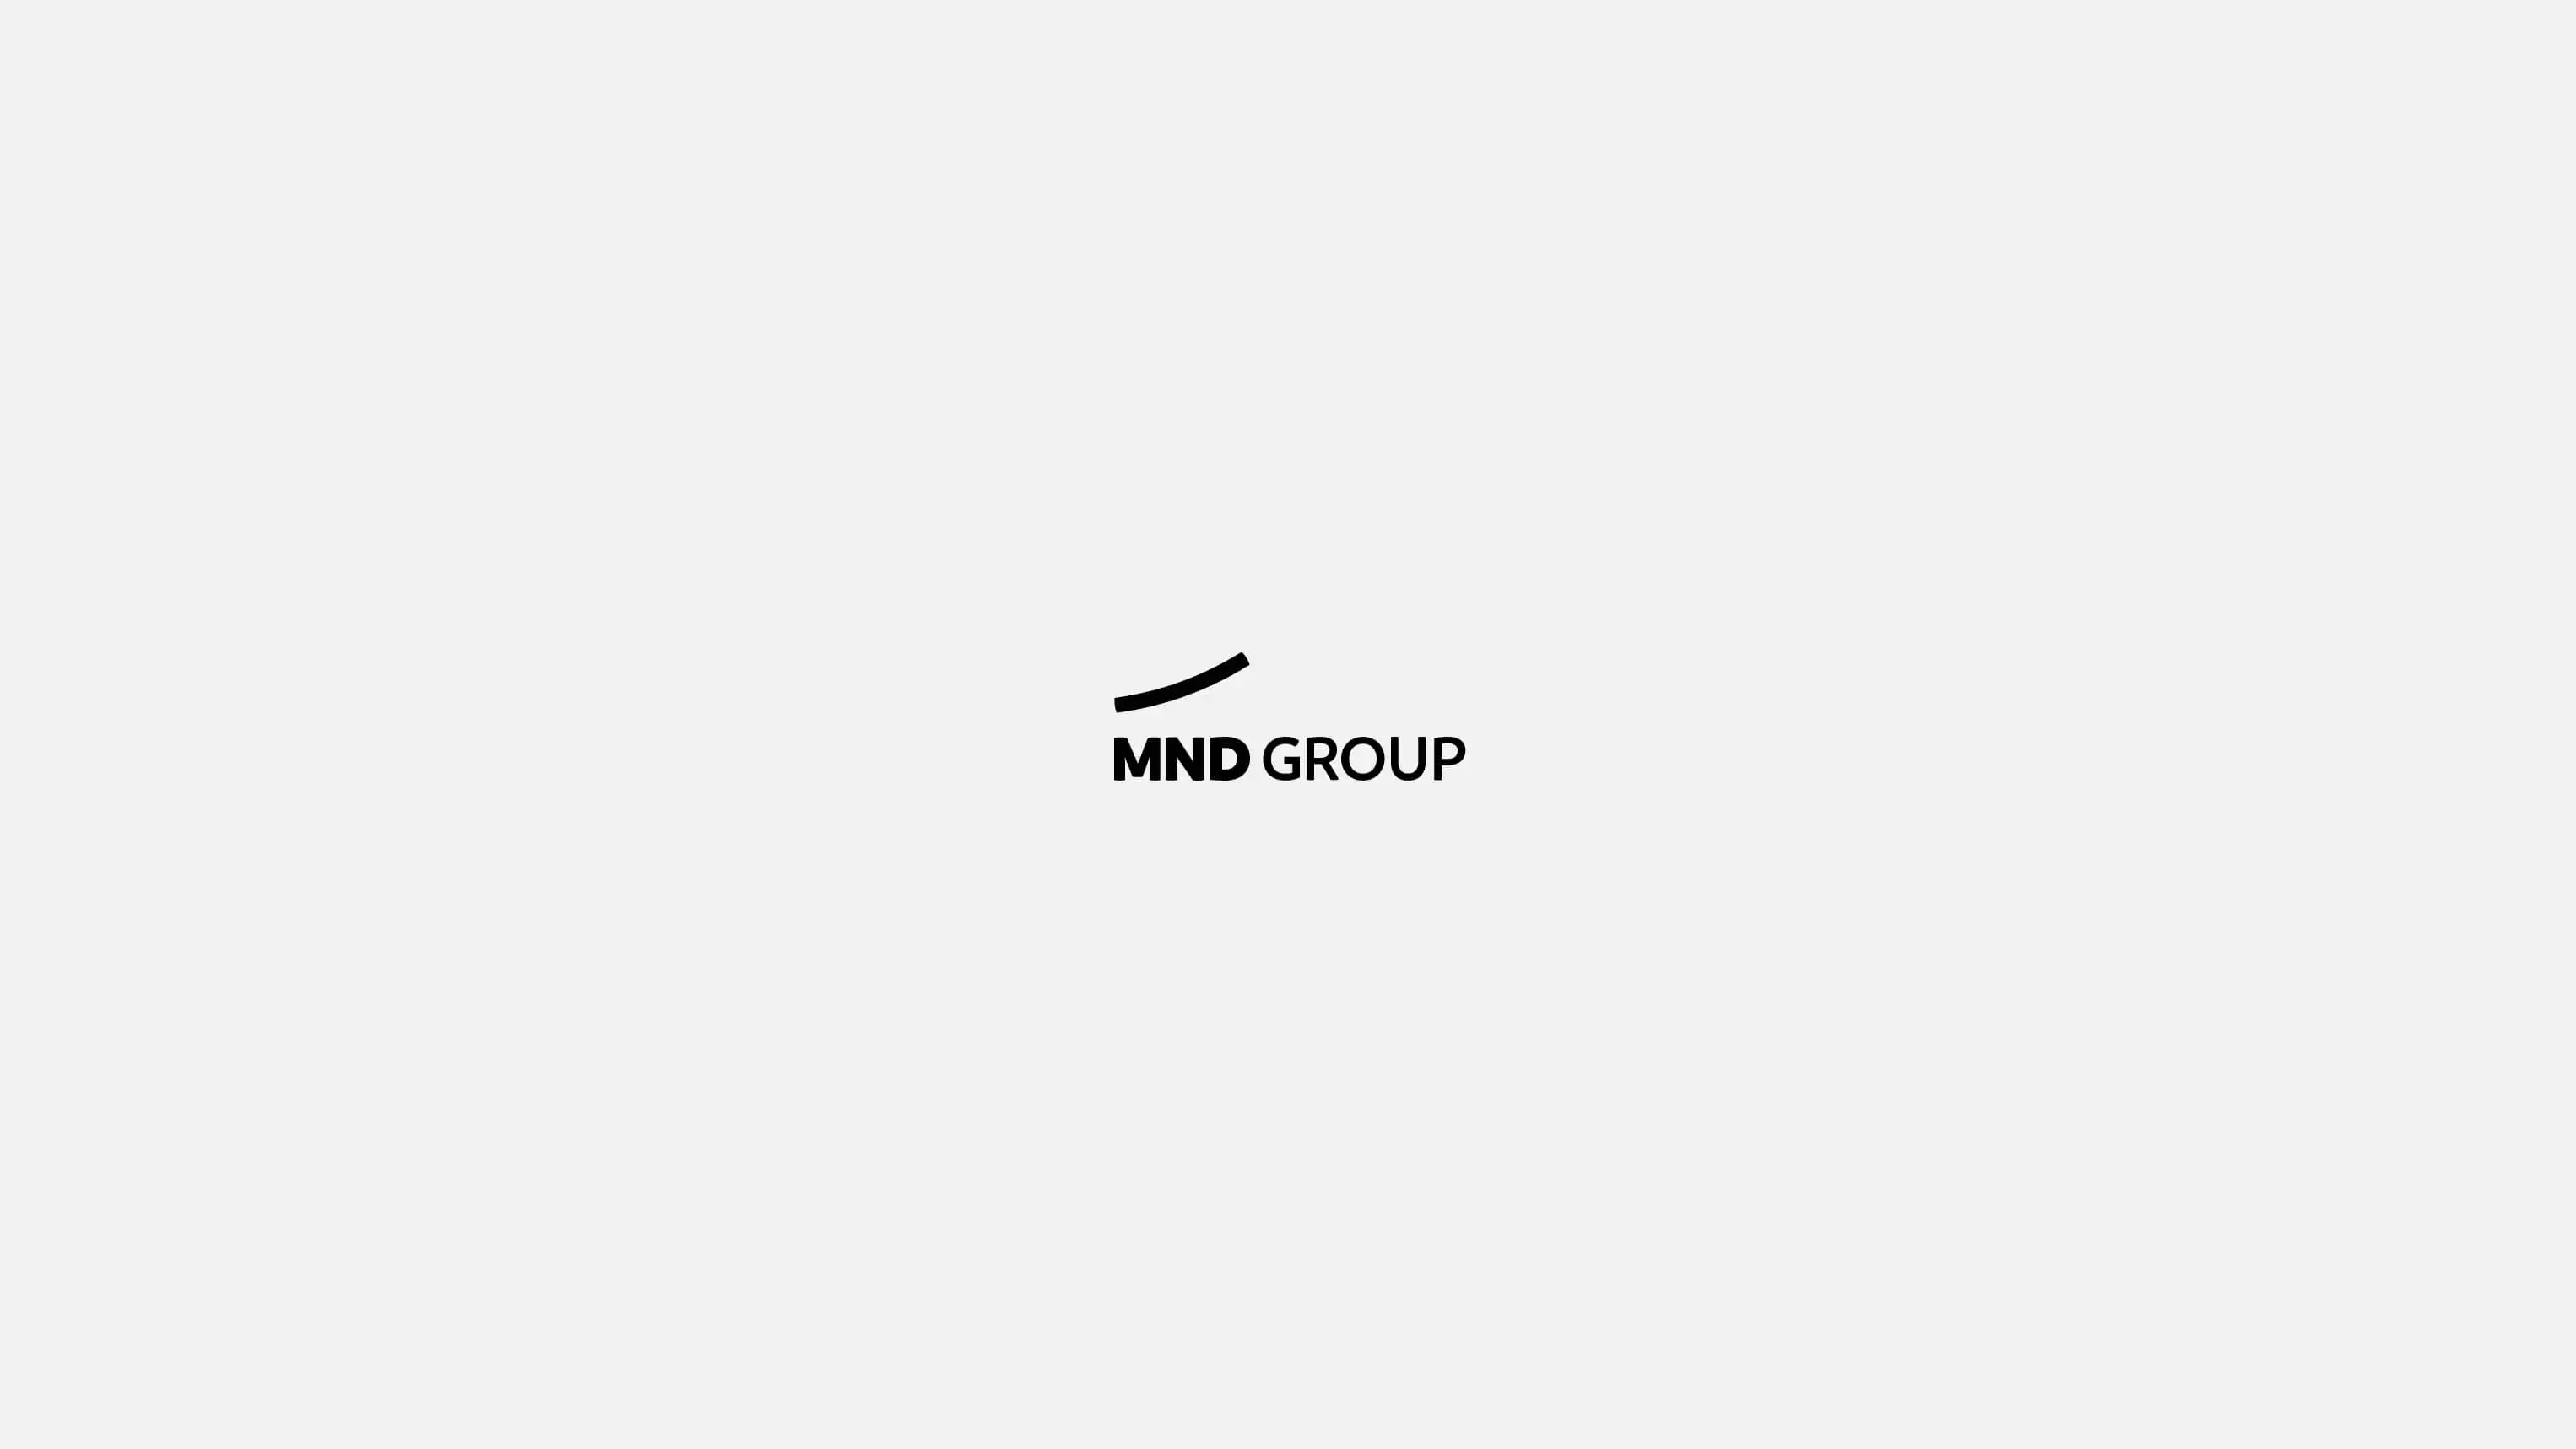 MND Group's logotype